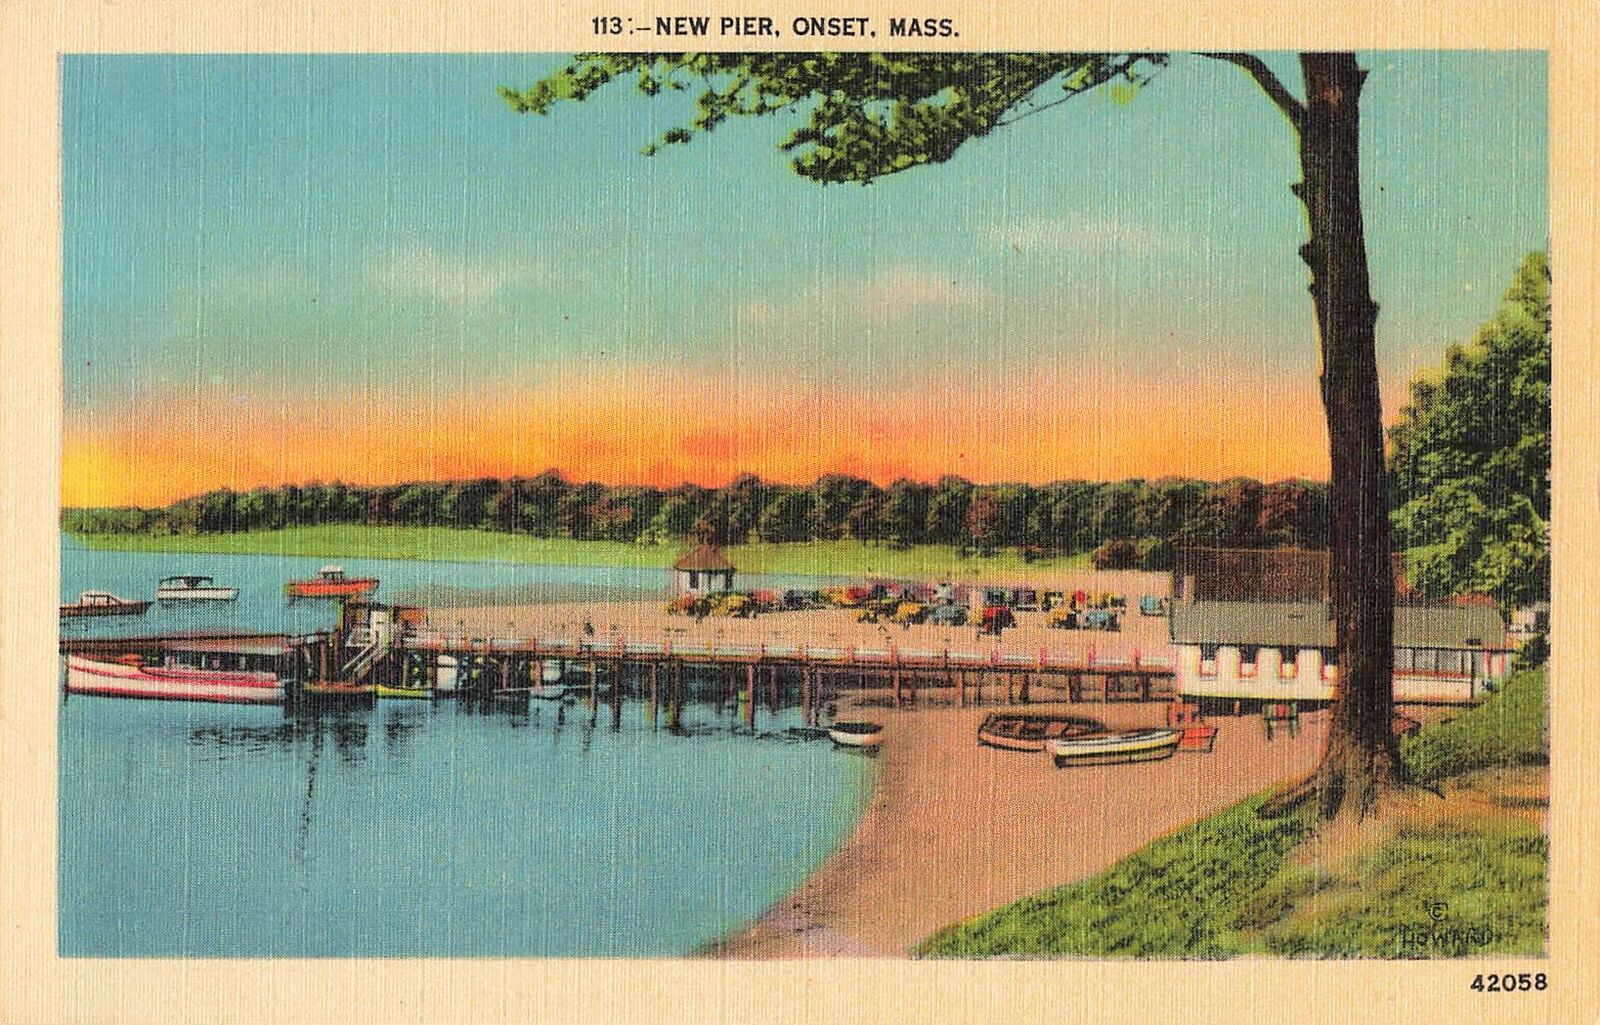 Vintage Postcard Scenic View New Pier, Onset, Massachusetts